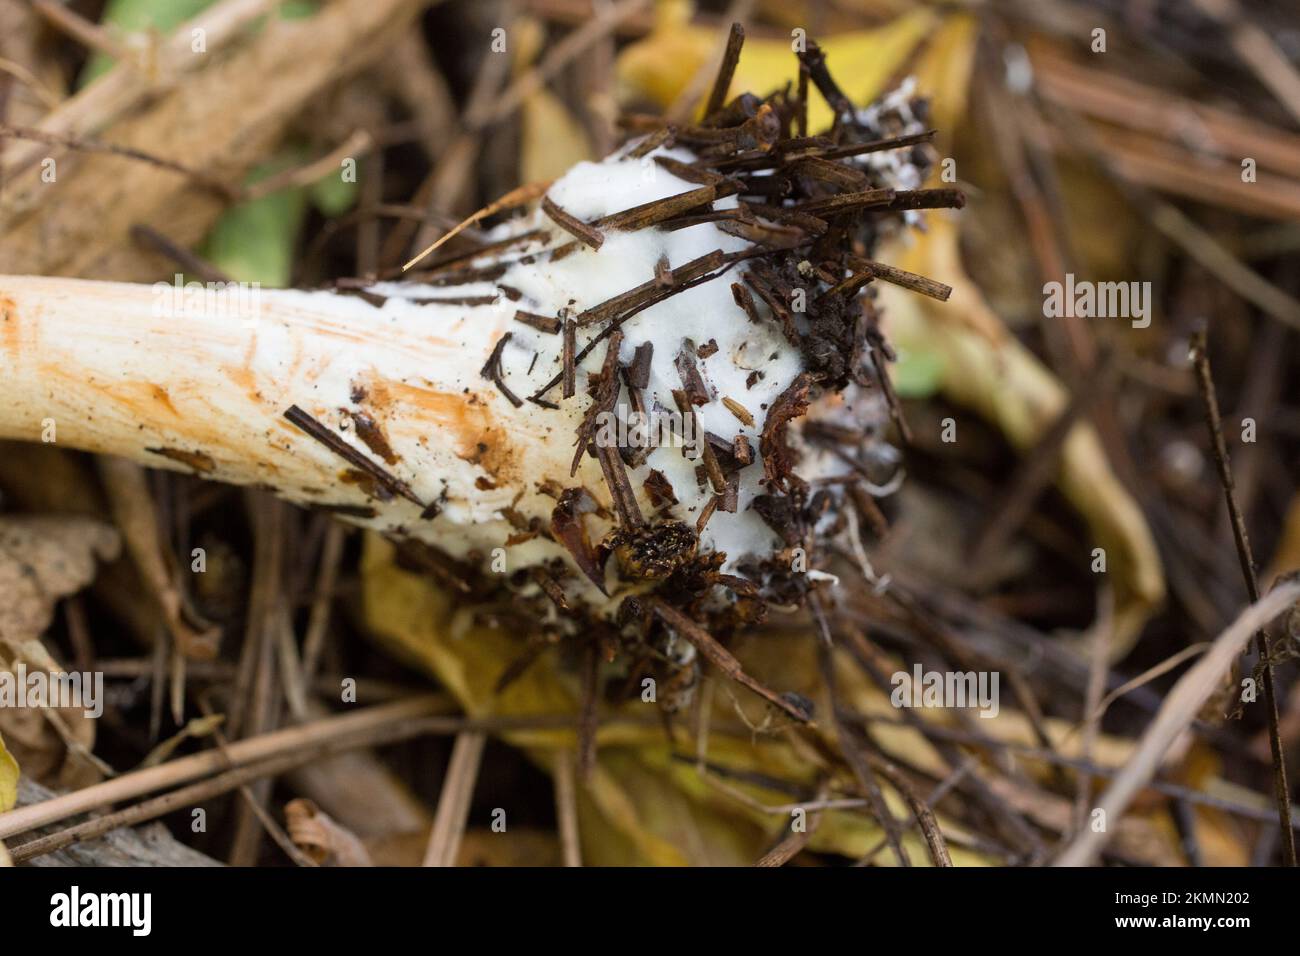 The stem base and mycelium of a shaggy parasol mushroom, Chlorophyllum rhacodes. The mushroom was found growing under an ironwood tree, in Troy, Monta Stock Photo